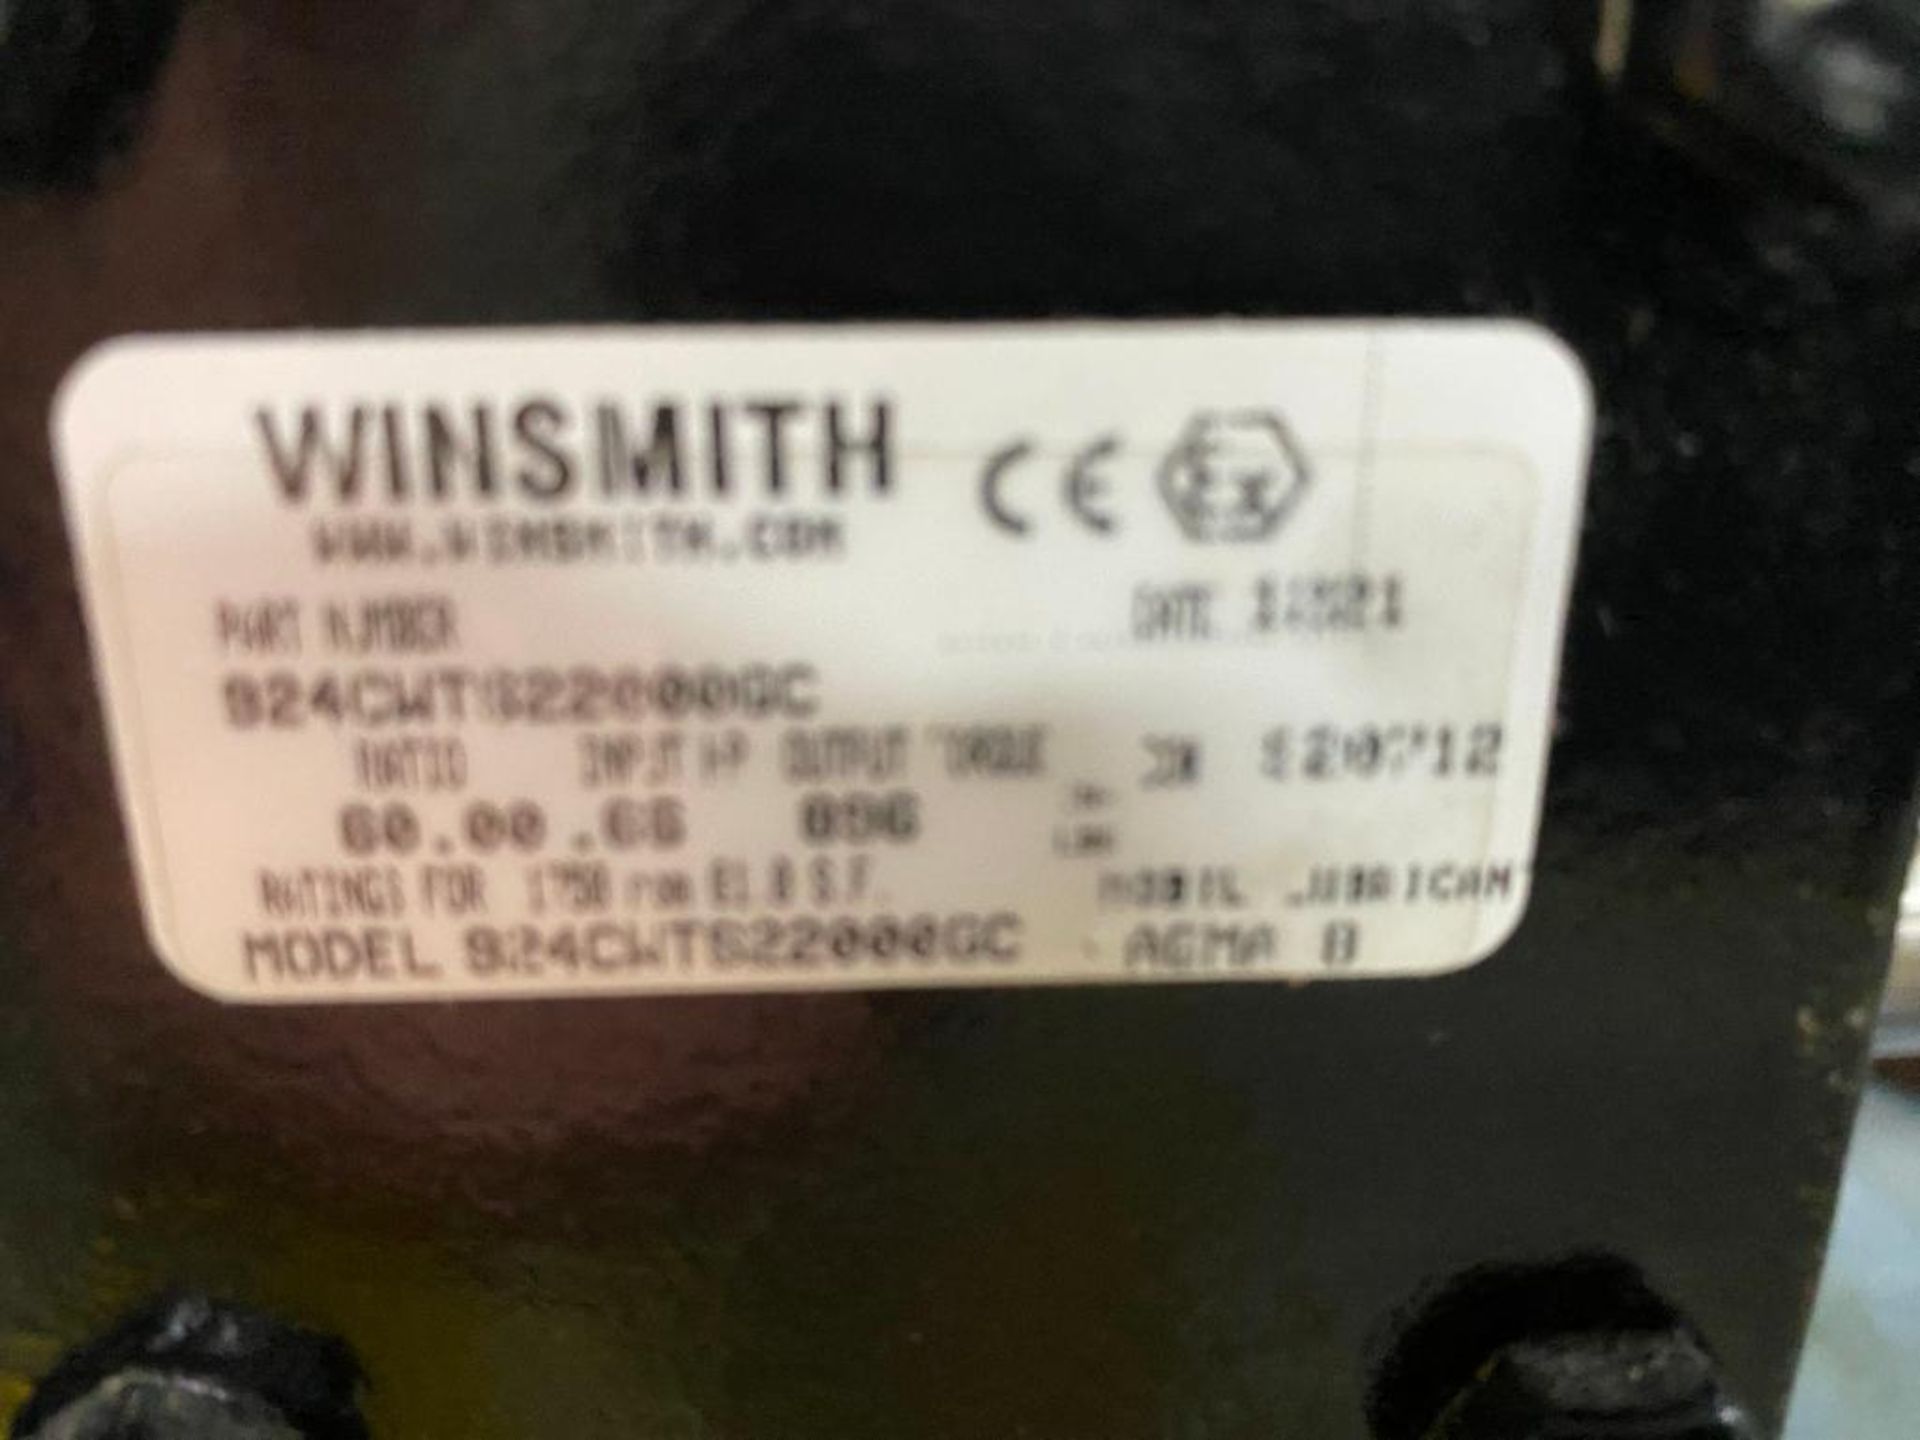 (2) Winsmith Speed Reducers, Part No. 924CWTS22000GC & 924CWT, Ratio: 60:66 & 30:1.23 - Bild 2 aus 2